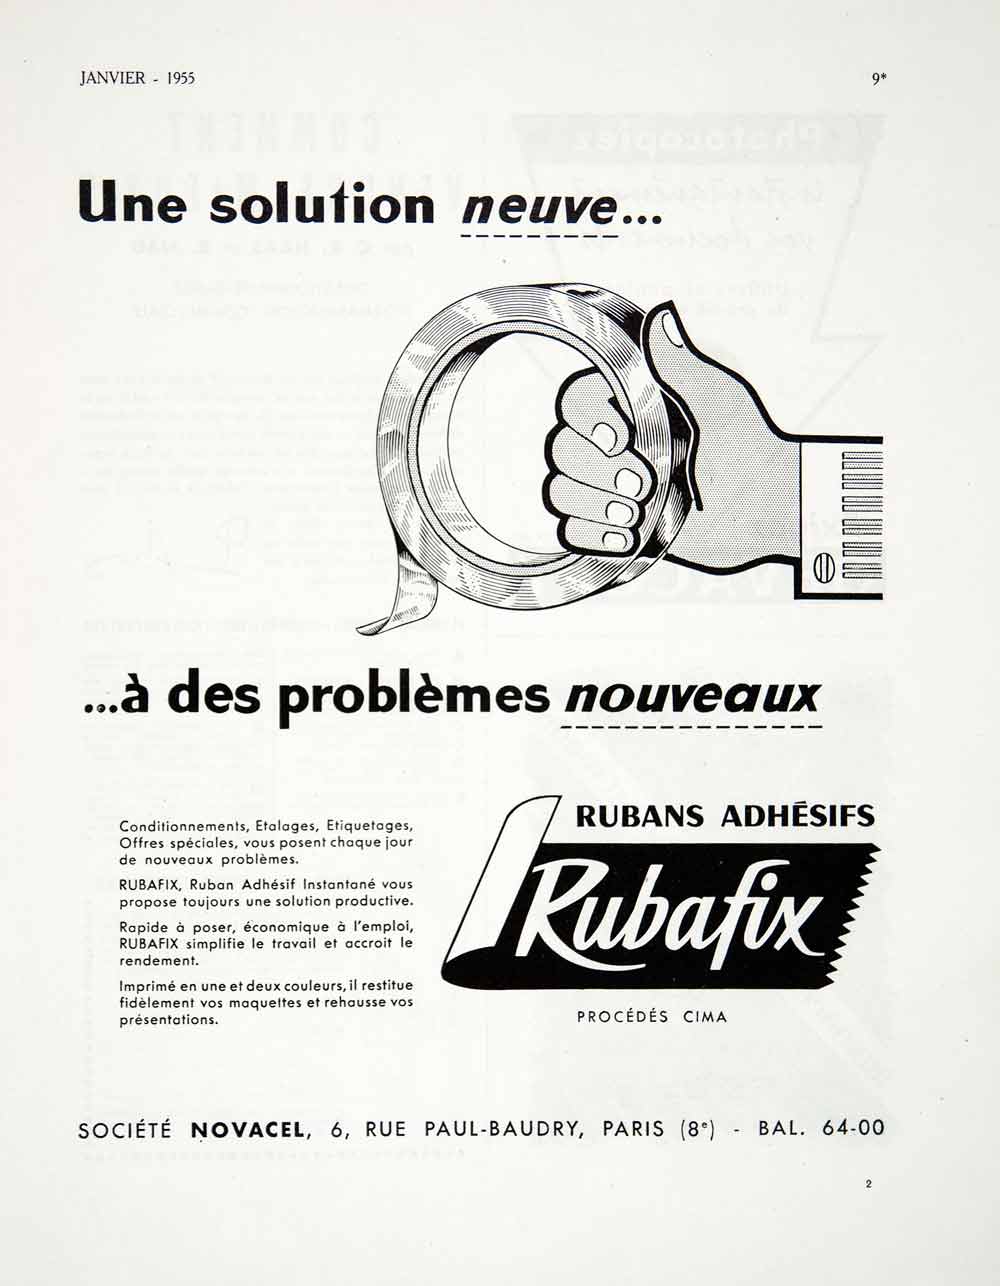 1955 Ad French Advertisement Rubafix Adhesive Tape Novacel Rue Paul-Baudry VEN2